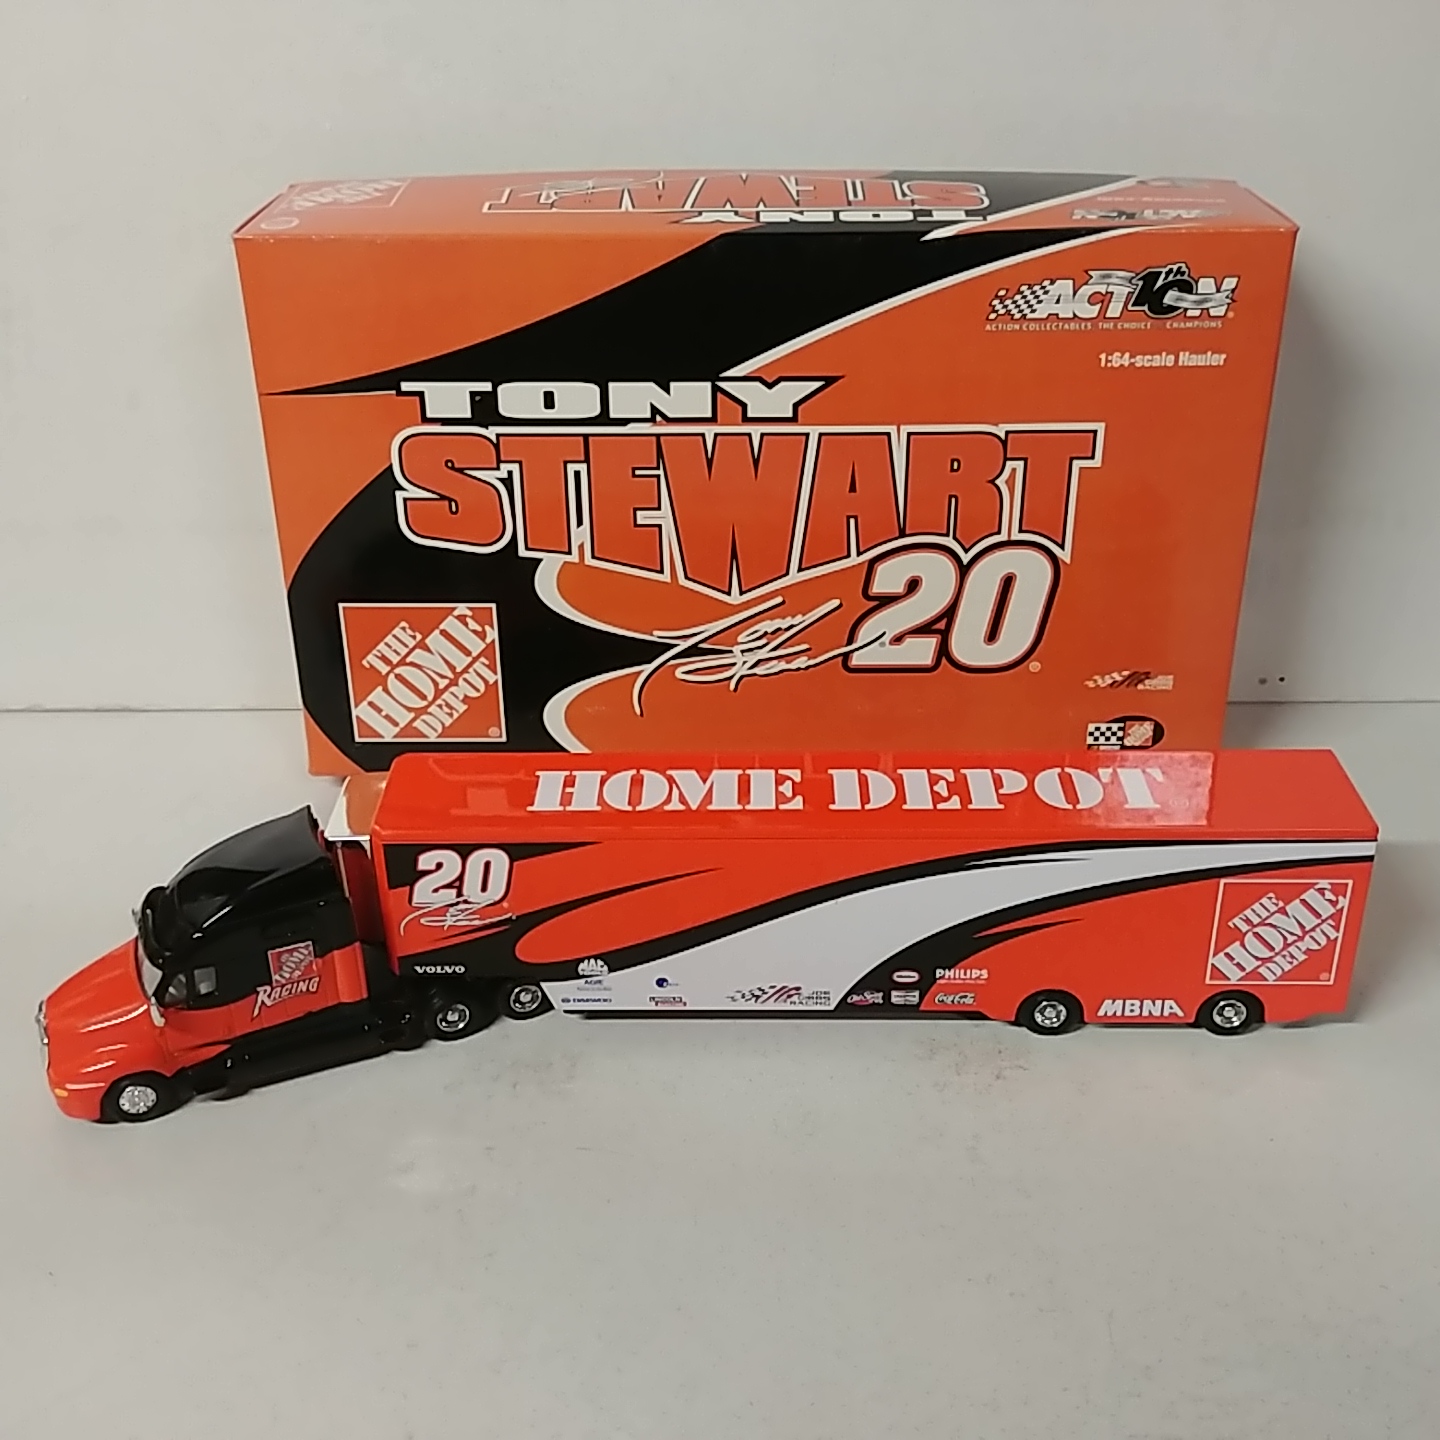 2002 Tony Stewart 1/64th Home Depot hauler